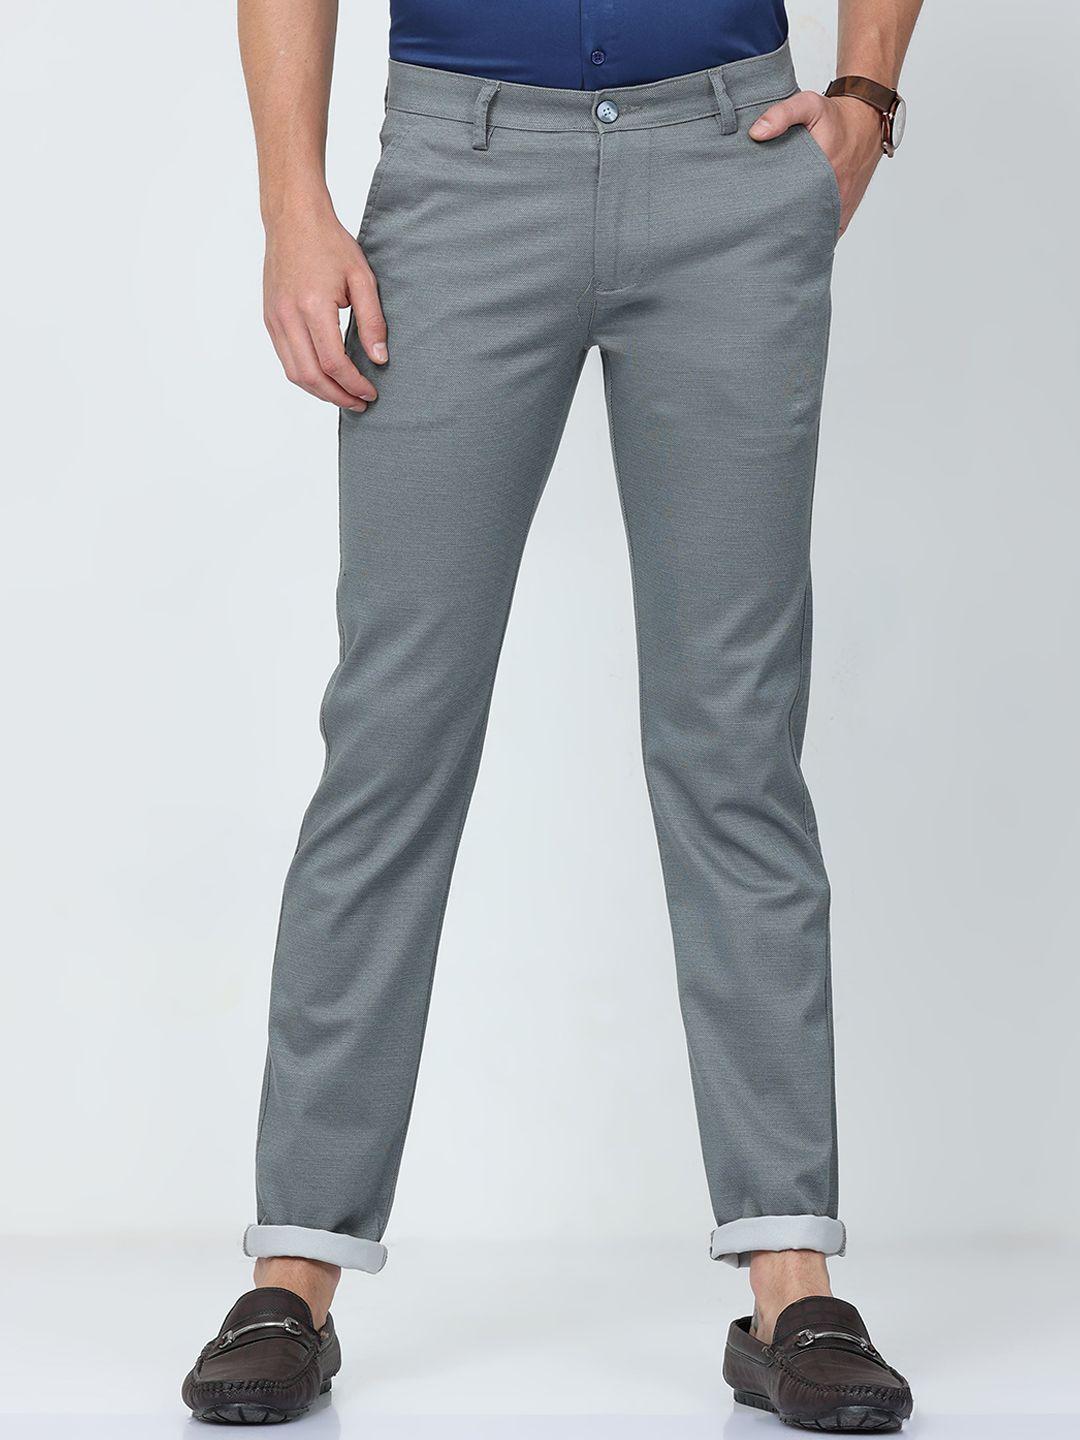 cp-bro-men-classic-slim-fit-cotton-trousers